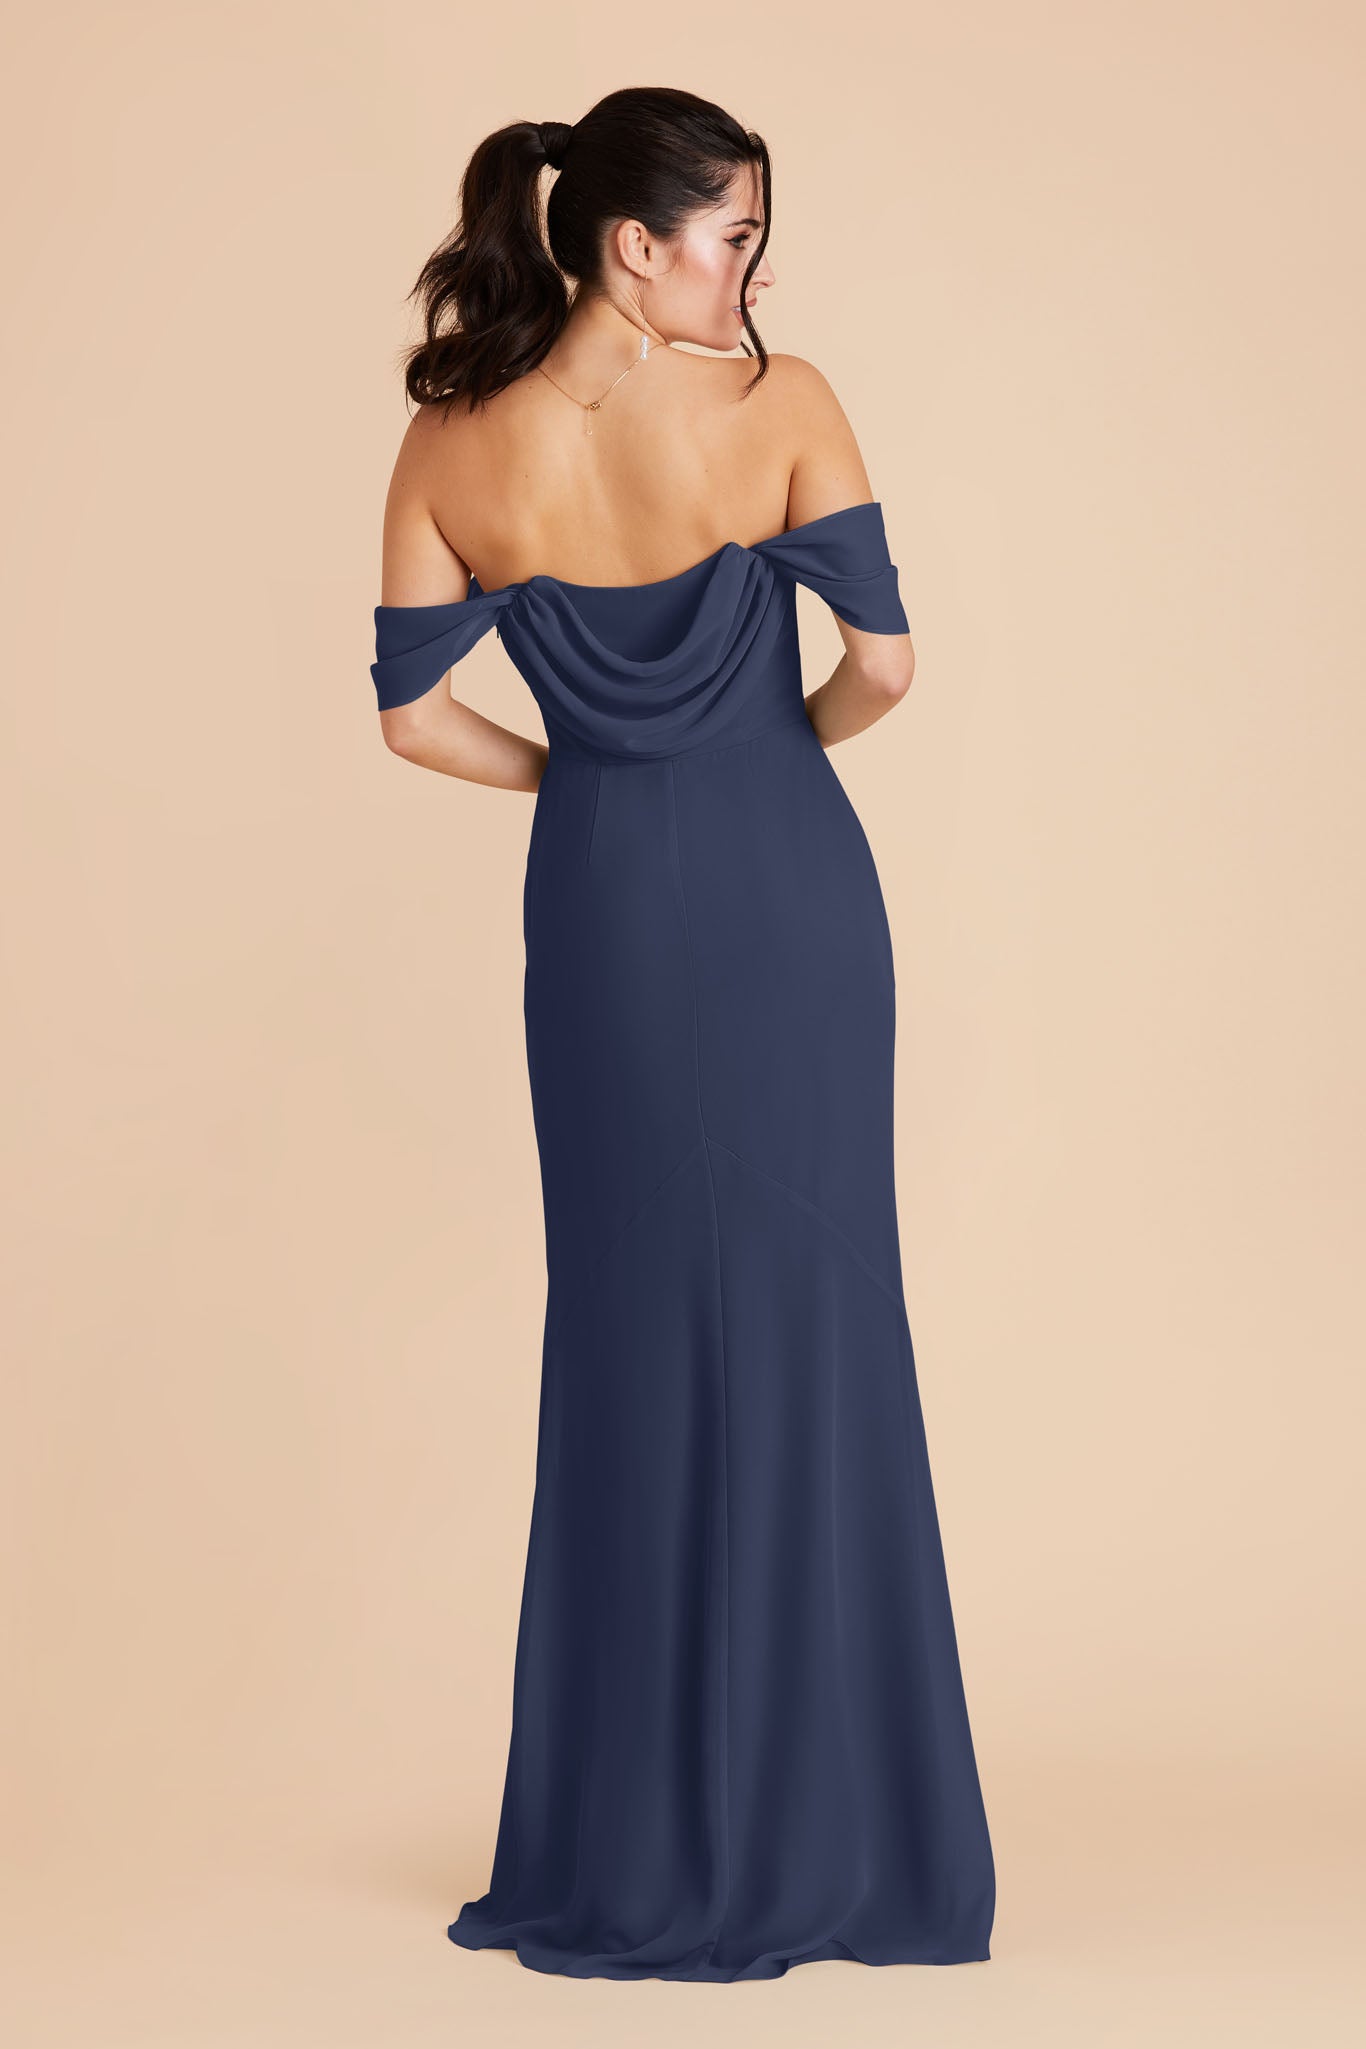 Slate Blue Mira Convertible Dress by Birdy Grey